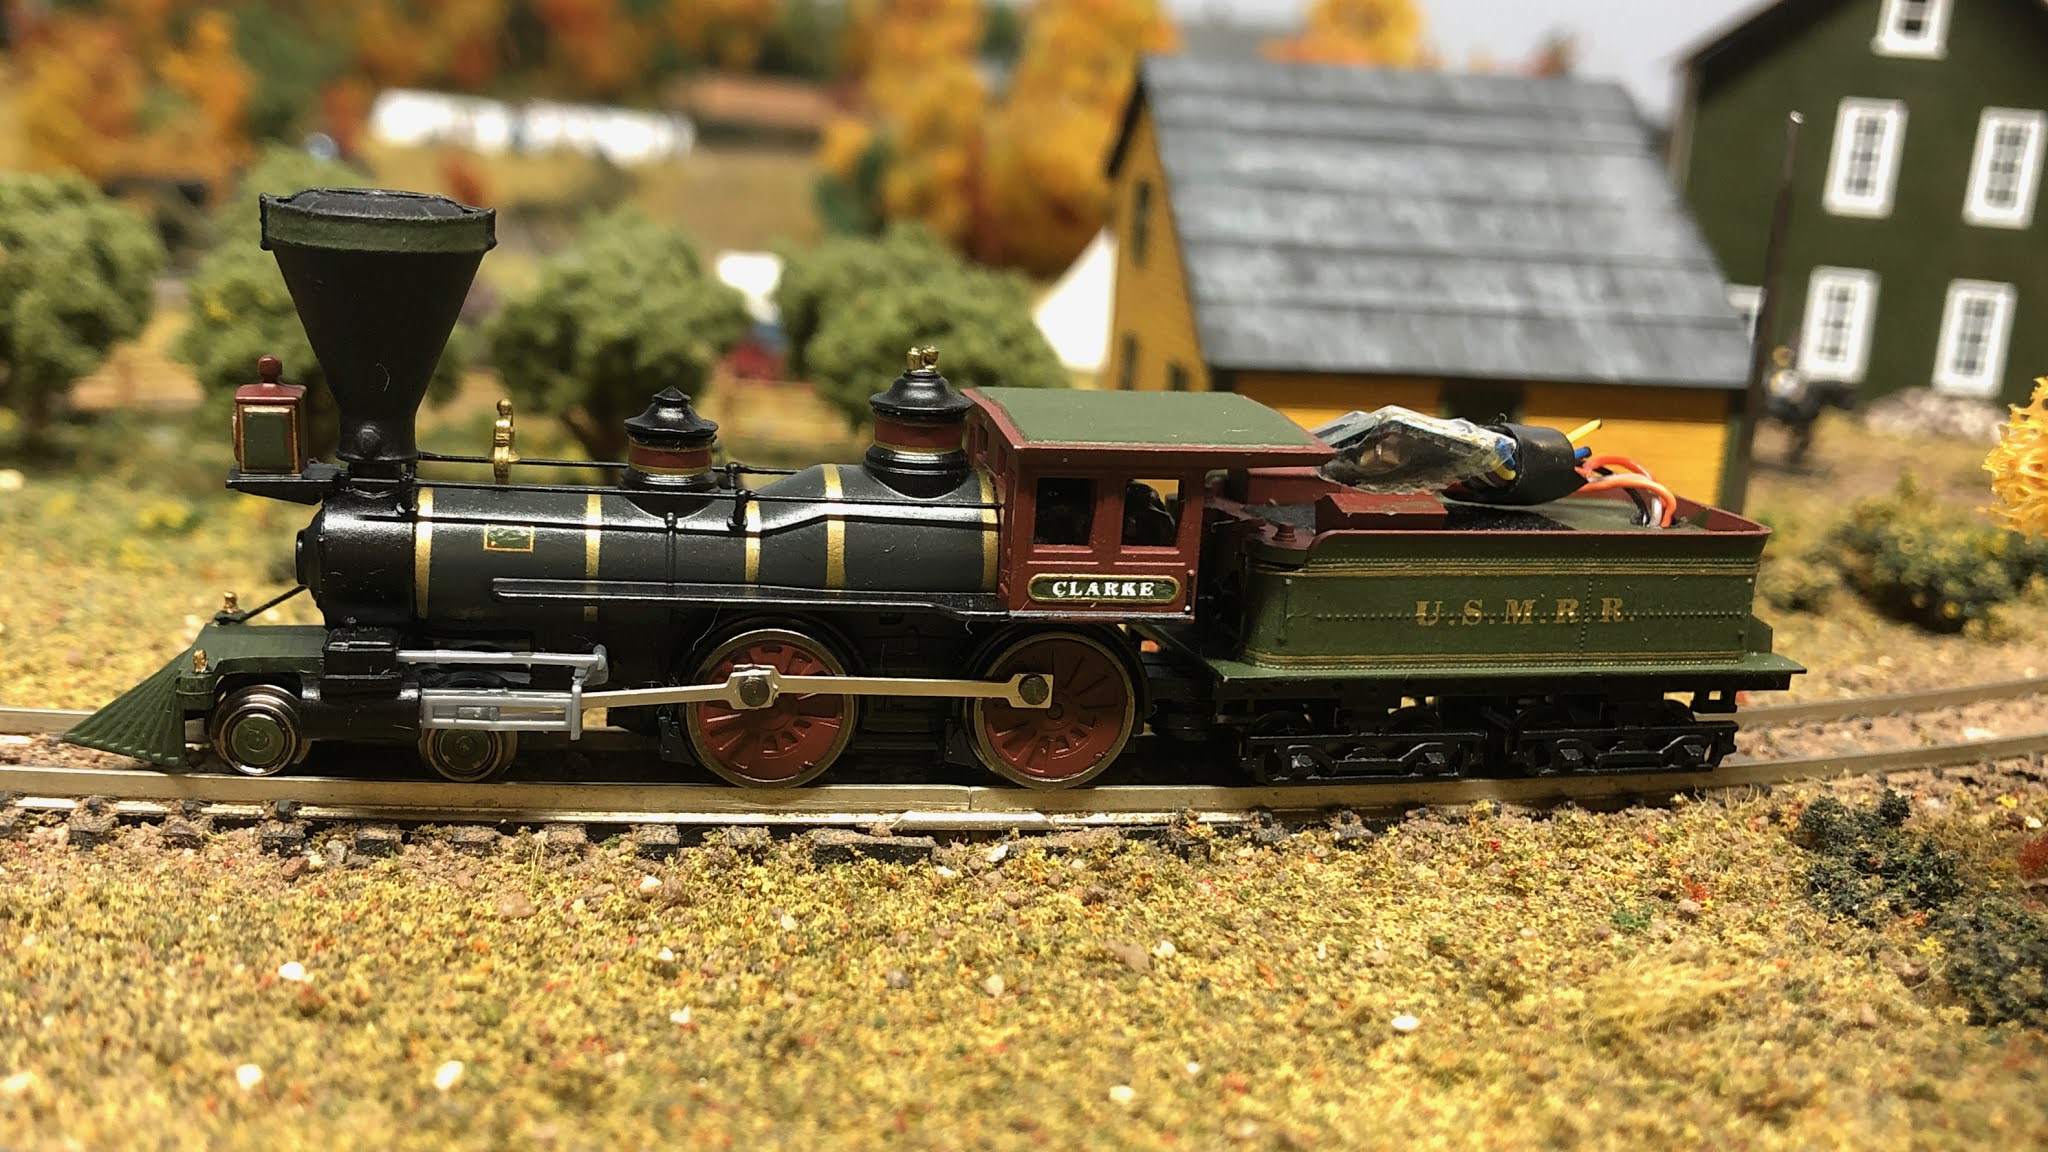 Amazing G Scale Model Railway Layout With Us Trains - Youtube 614